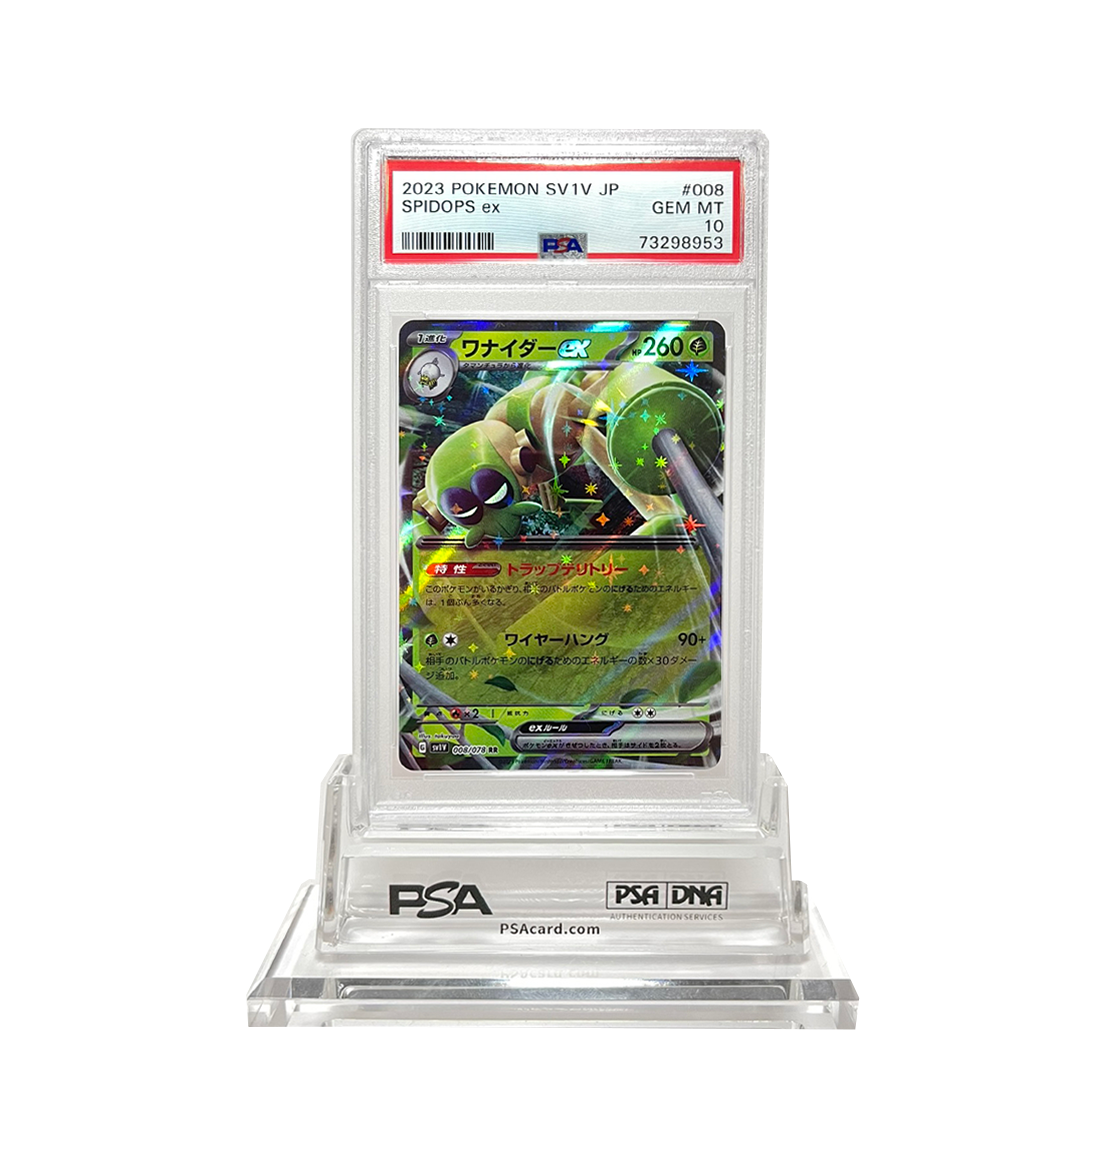 PSA 10 Spidops ex #008 Triplet Beat SV1a Japanese Pokemon card